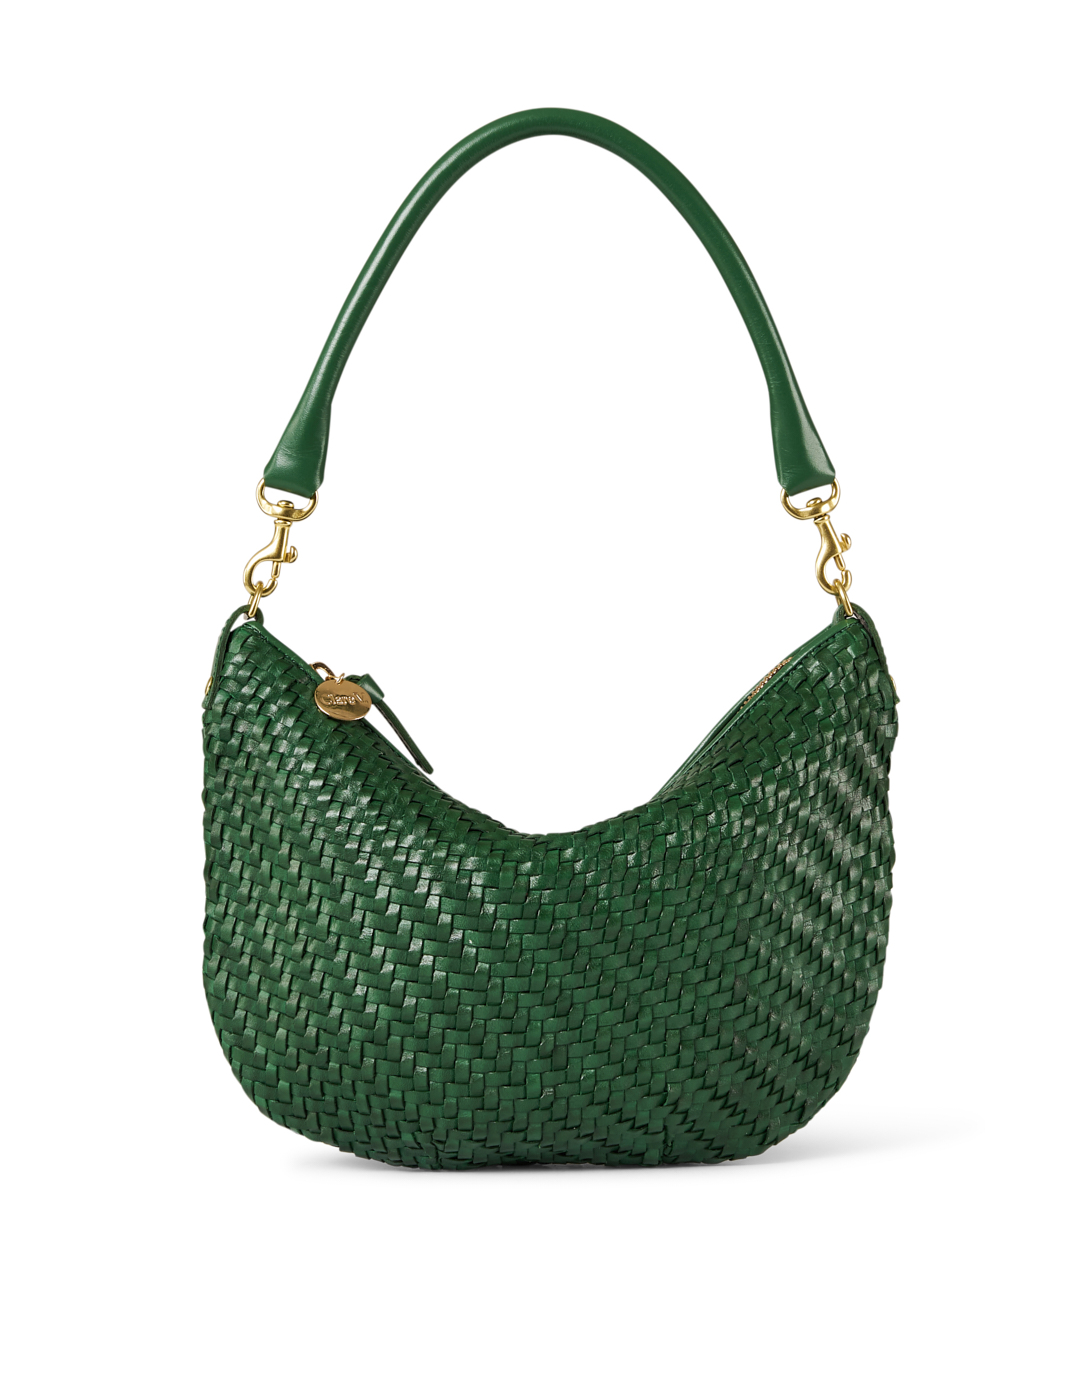 clare v green bag